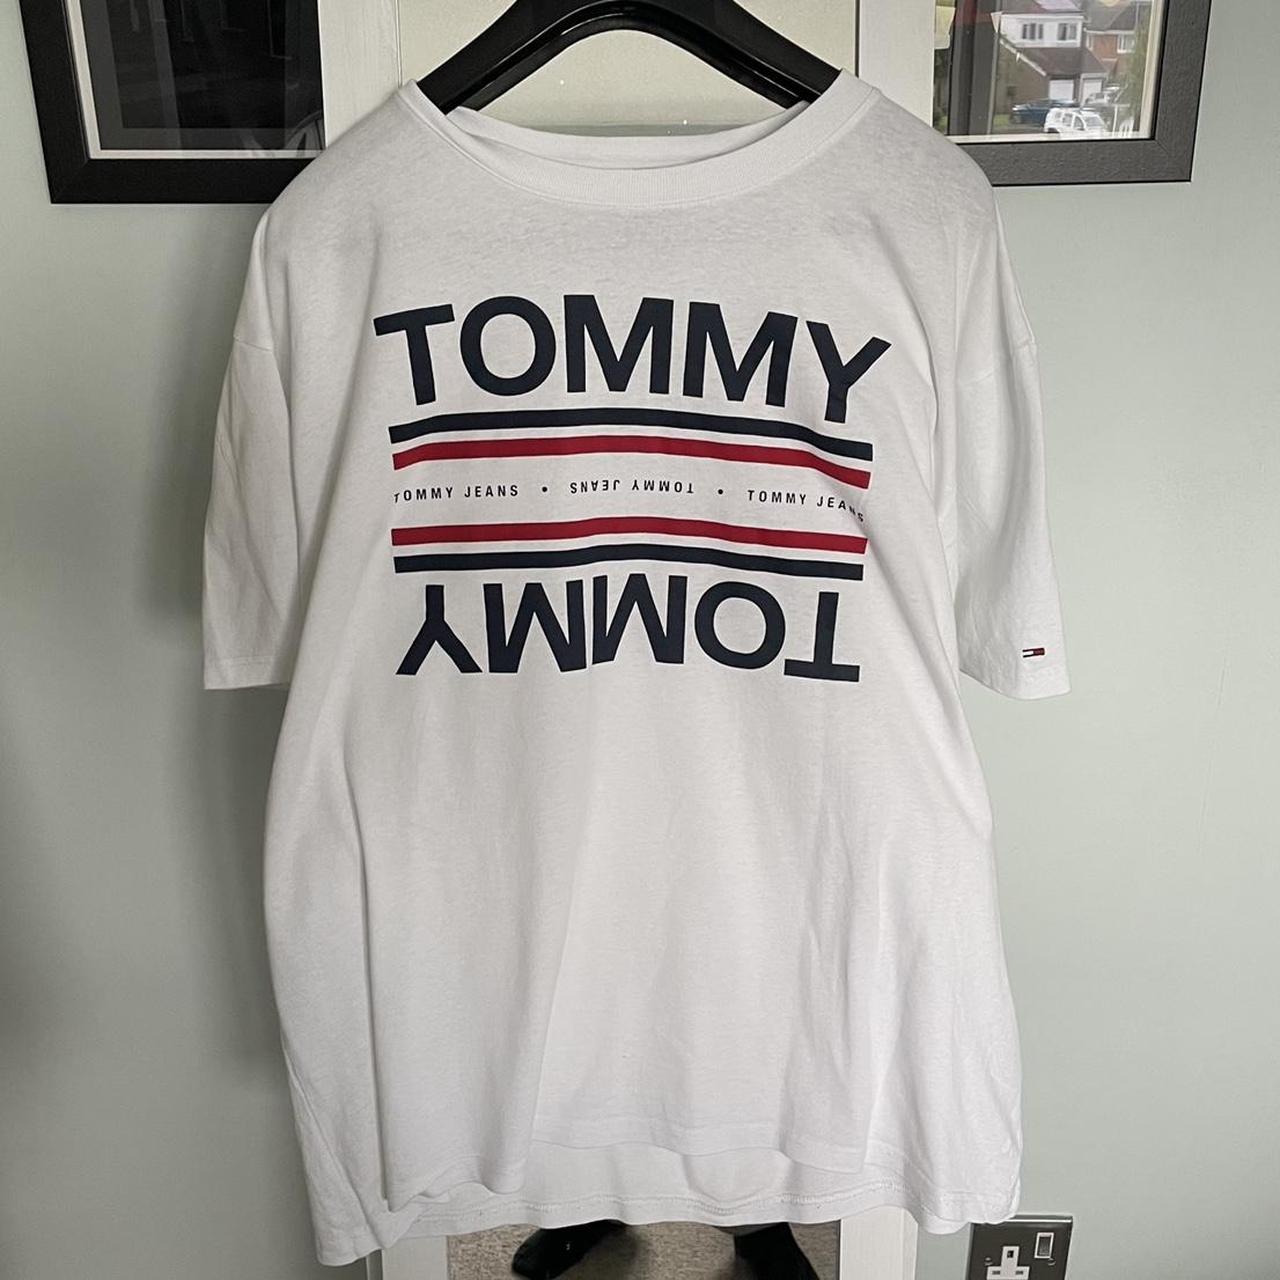 Tommy Hilfiger white t shirt - good condition no... - Depop